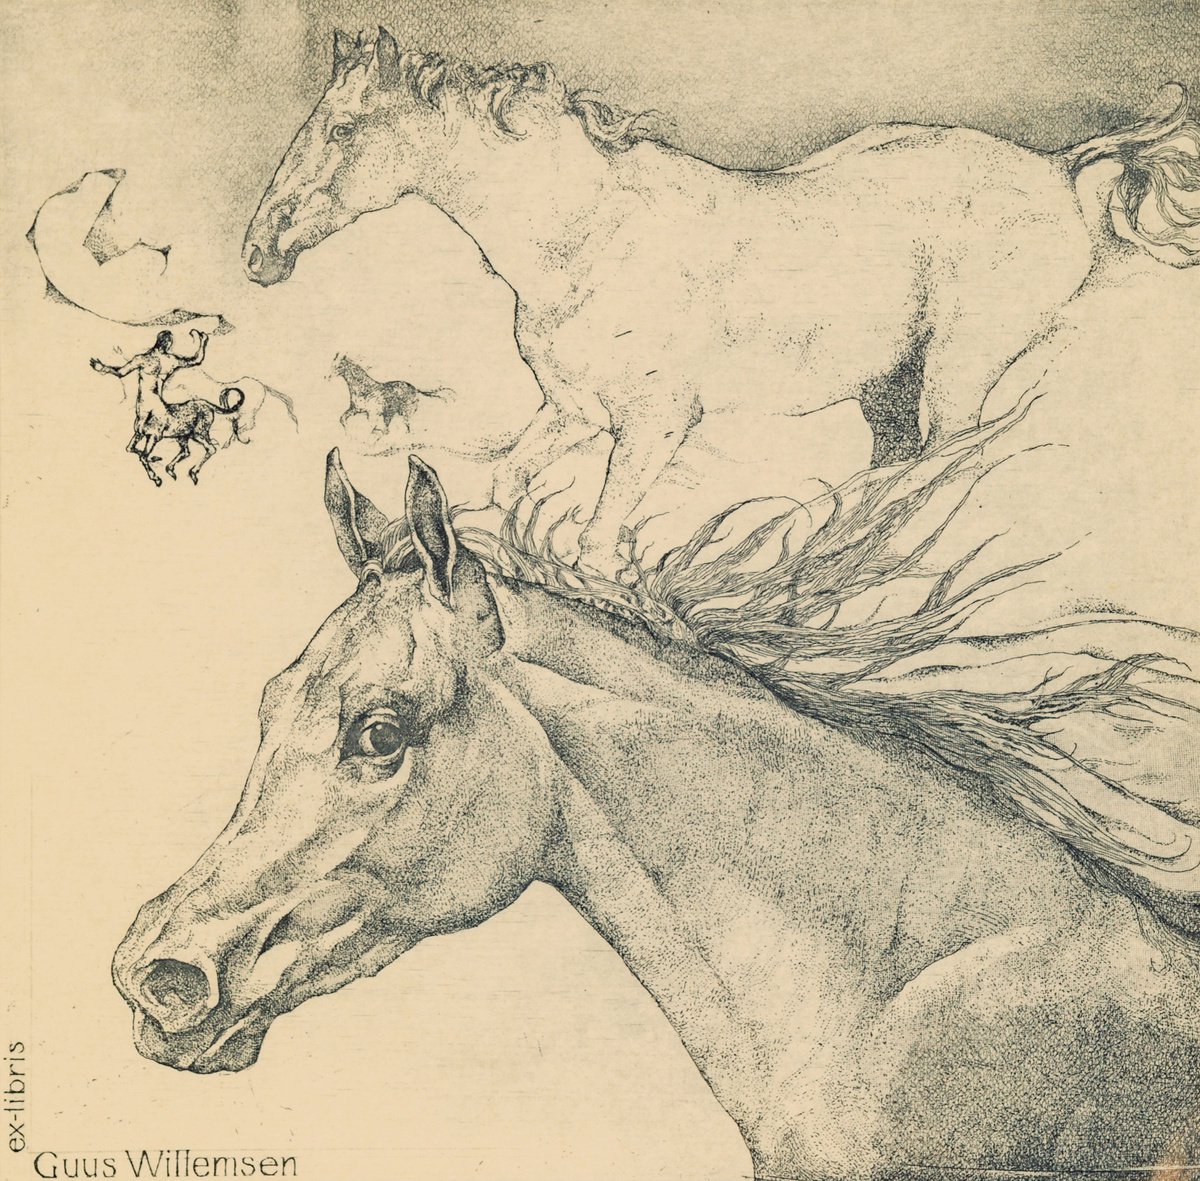 The Arabian Stallion by Eugenia Timoshenko